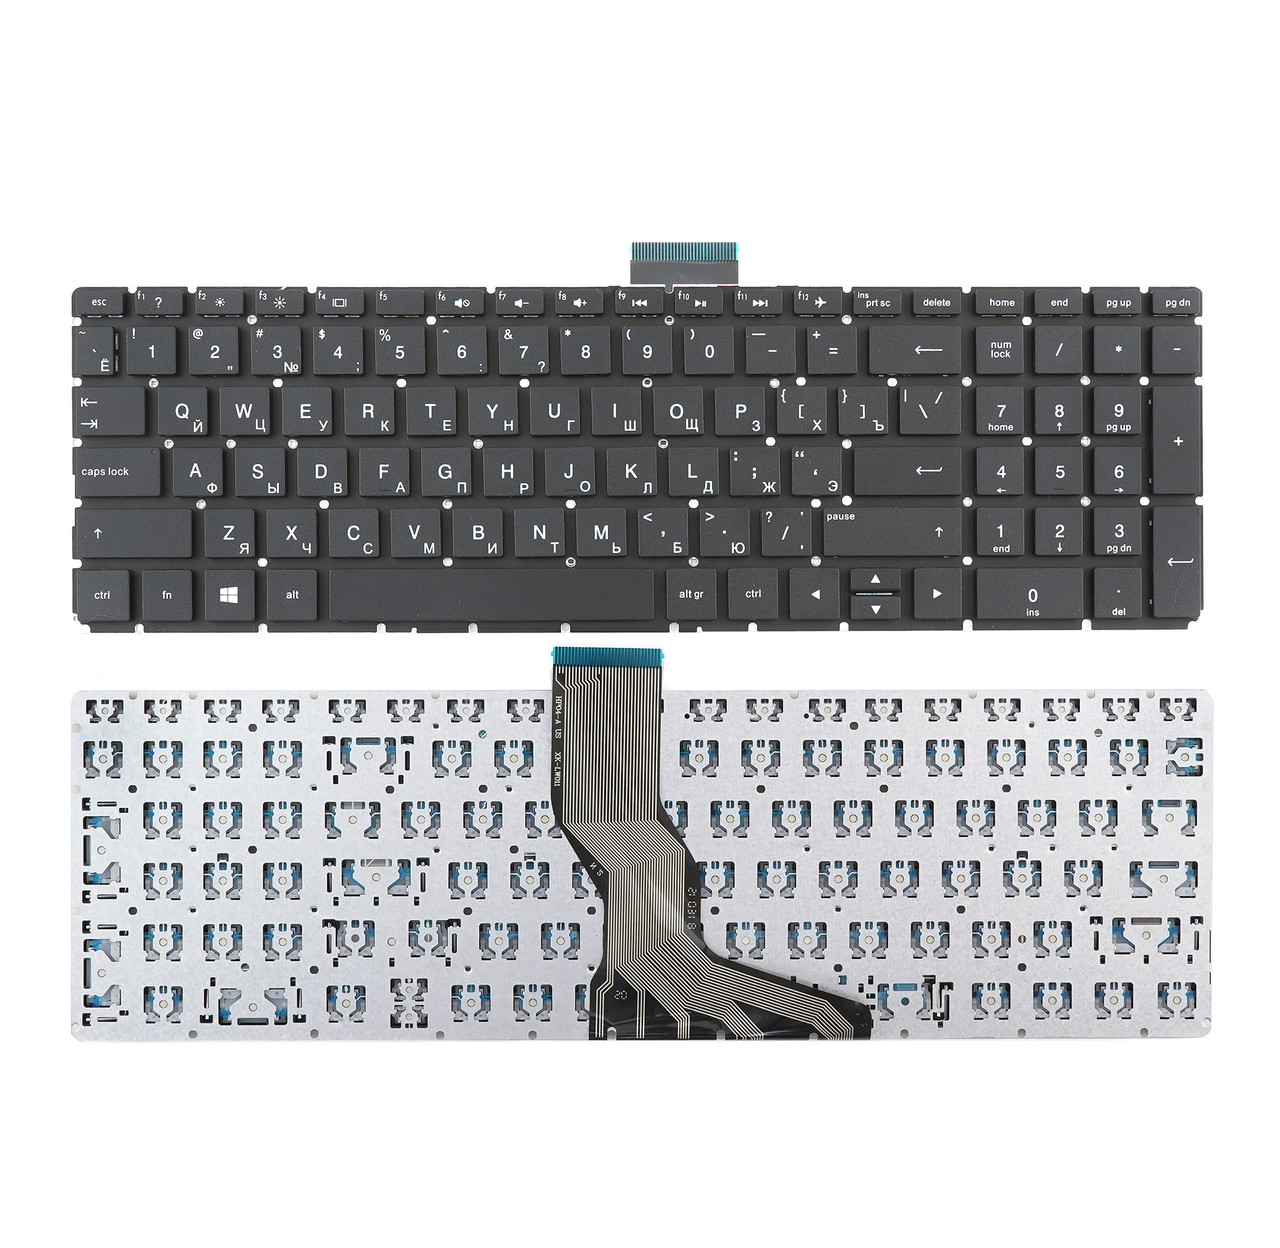 Клавиатура для ноутбука серий HP 250 G6, 255 G6